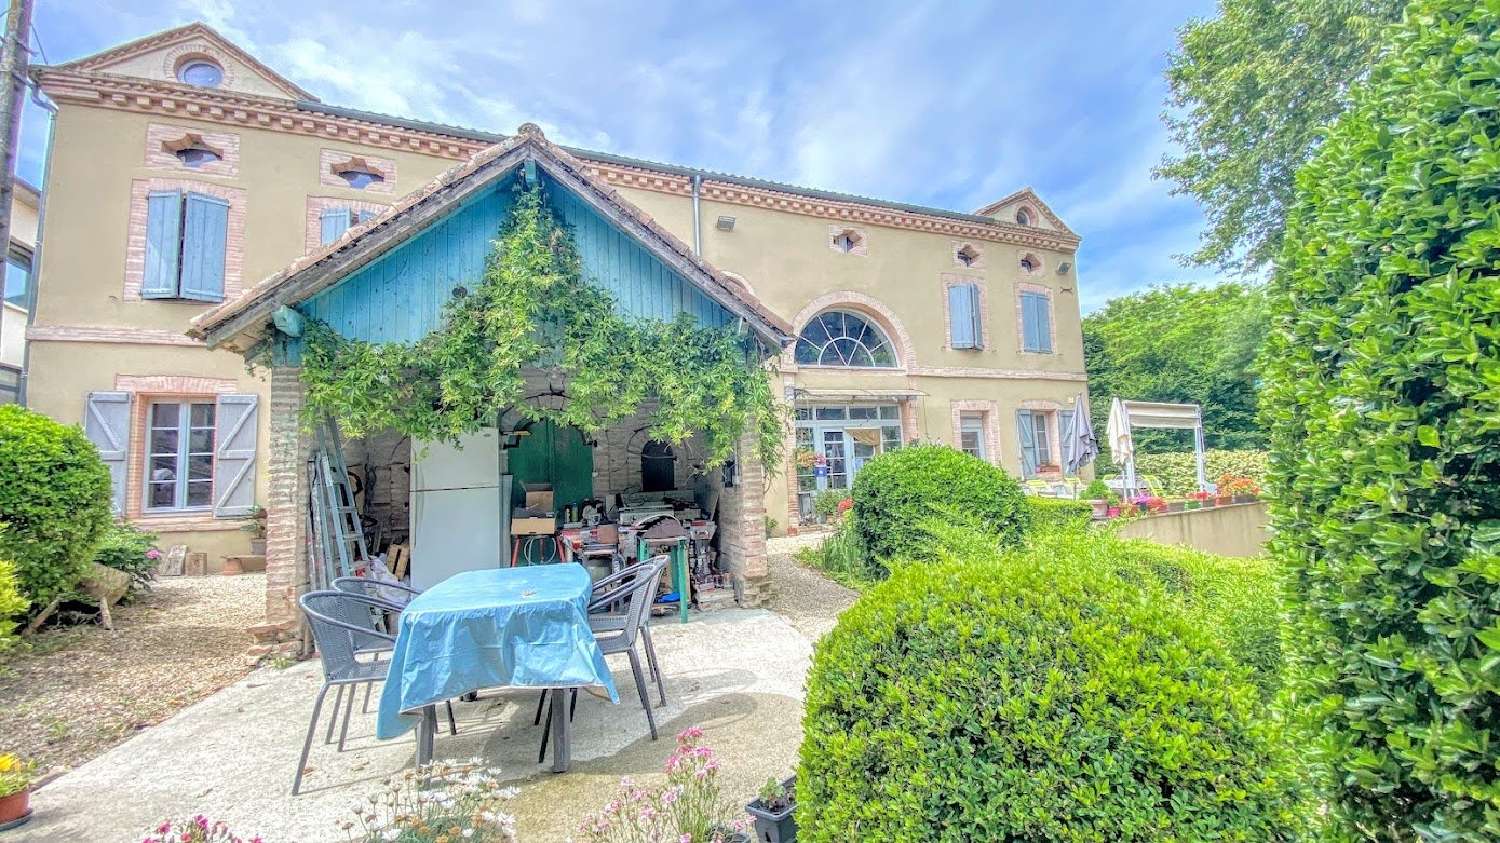  à vendre maison bourgeoise Montauban Tarn-et-Garonne 3